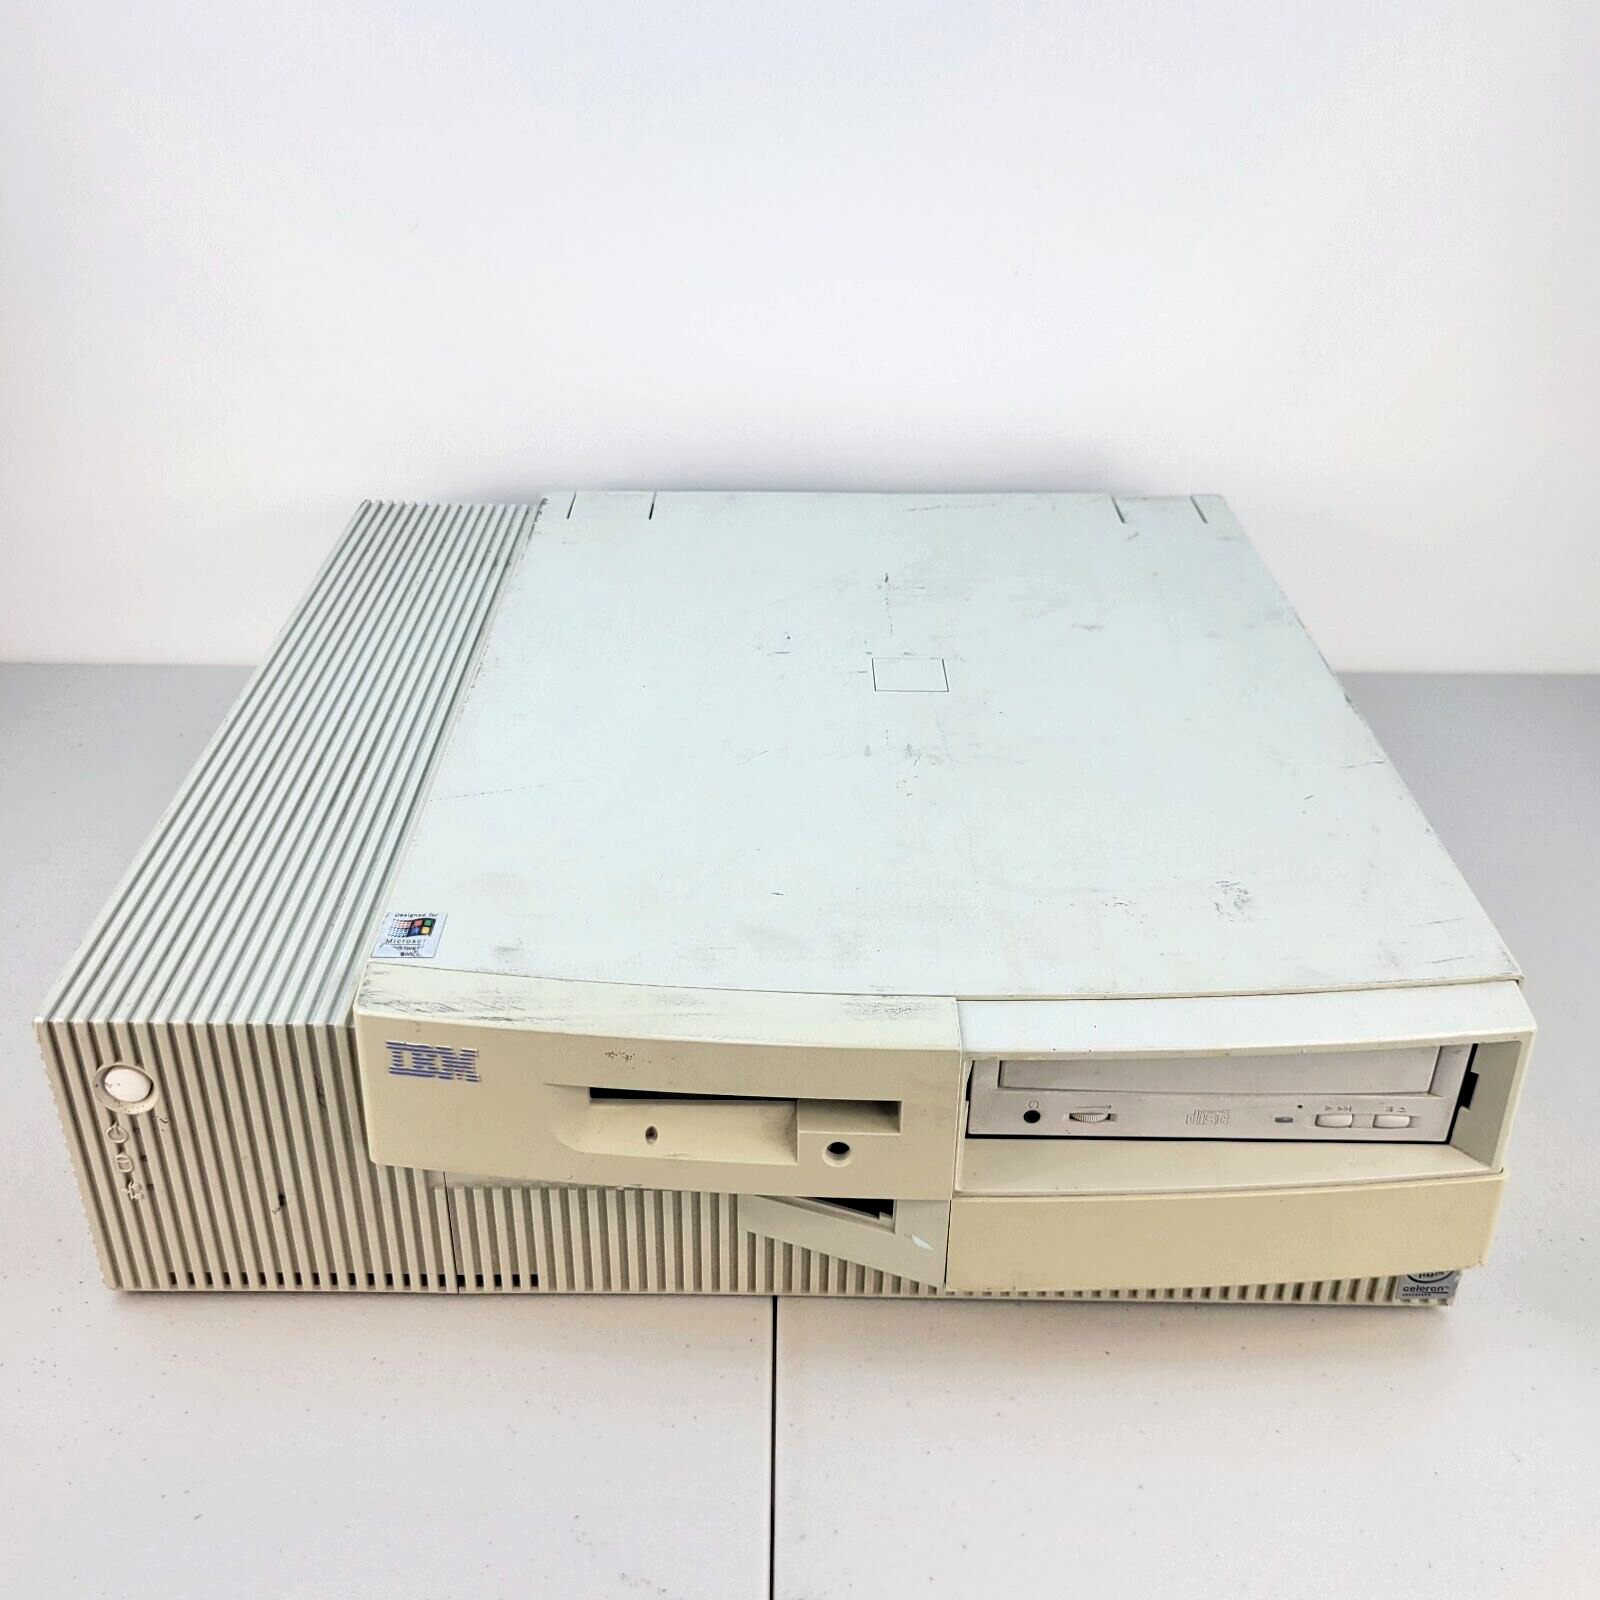 IBM Personal Computer 300GL 6275 20U Desktop PC Computer Vintage